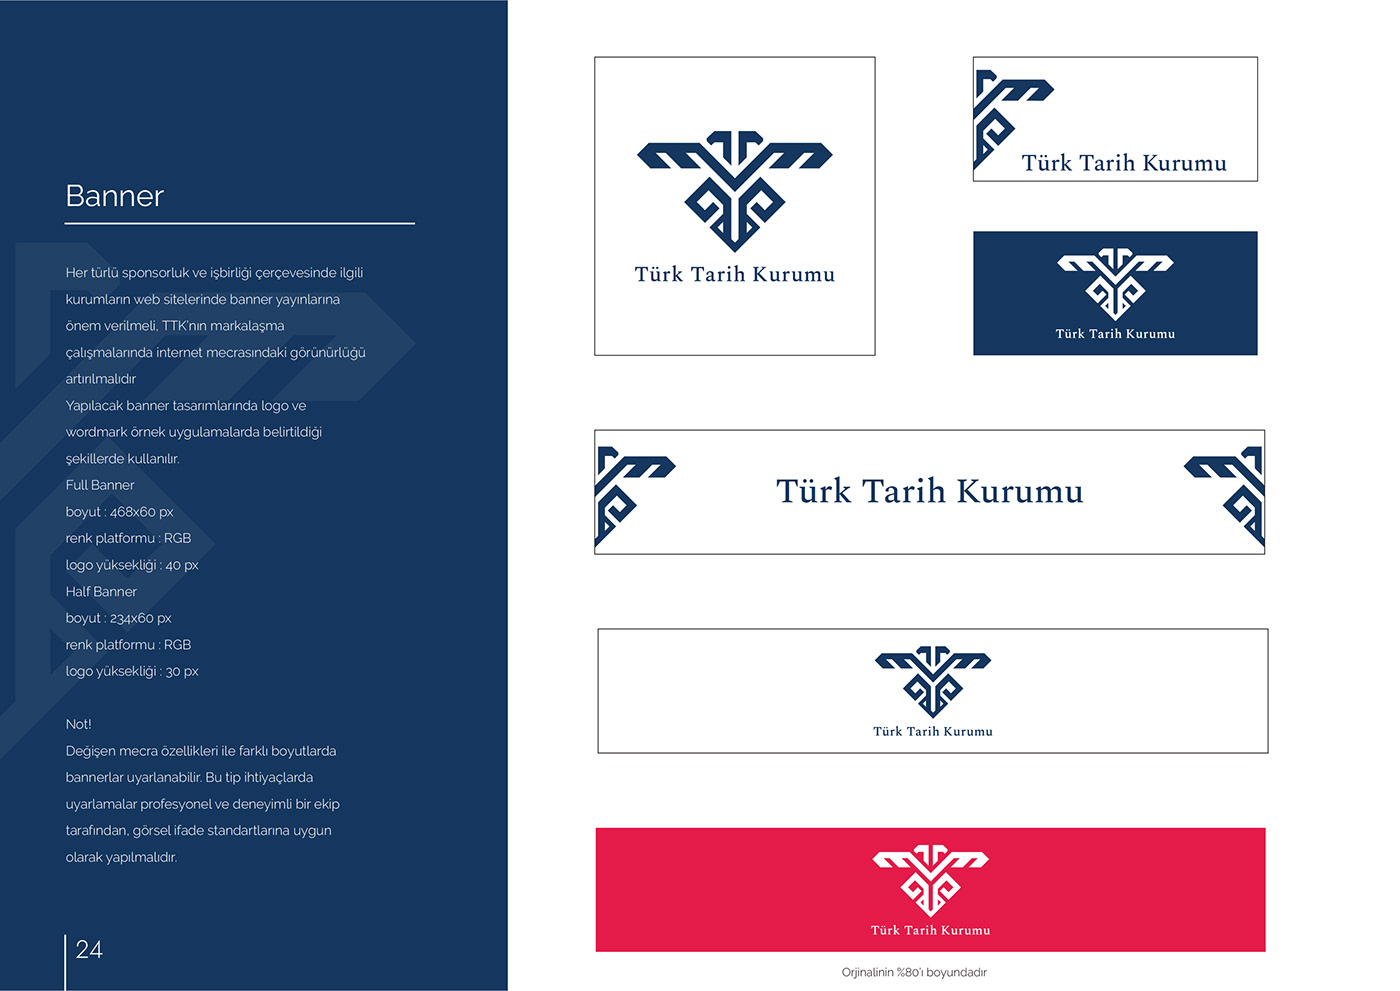 kurumsal kimlik Corporate Identity brand identity Logo Design visual identity Türk Tarih kurumu